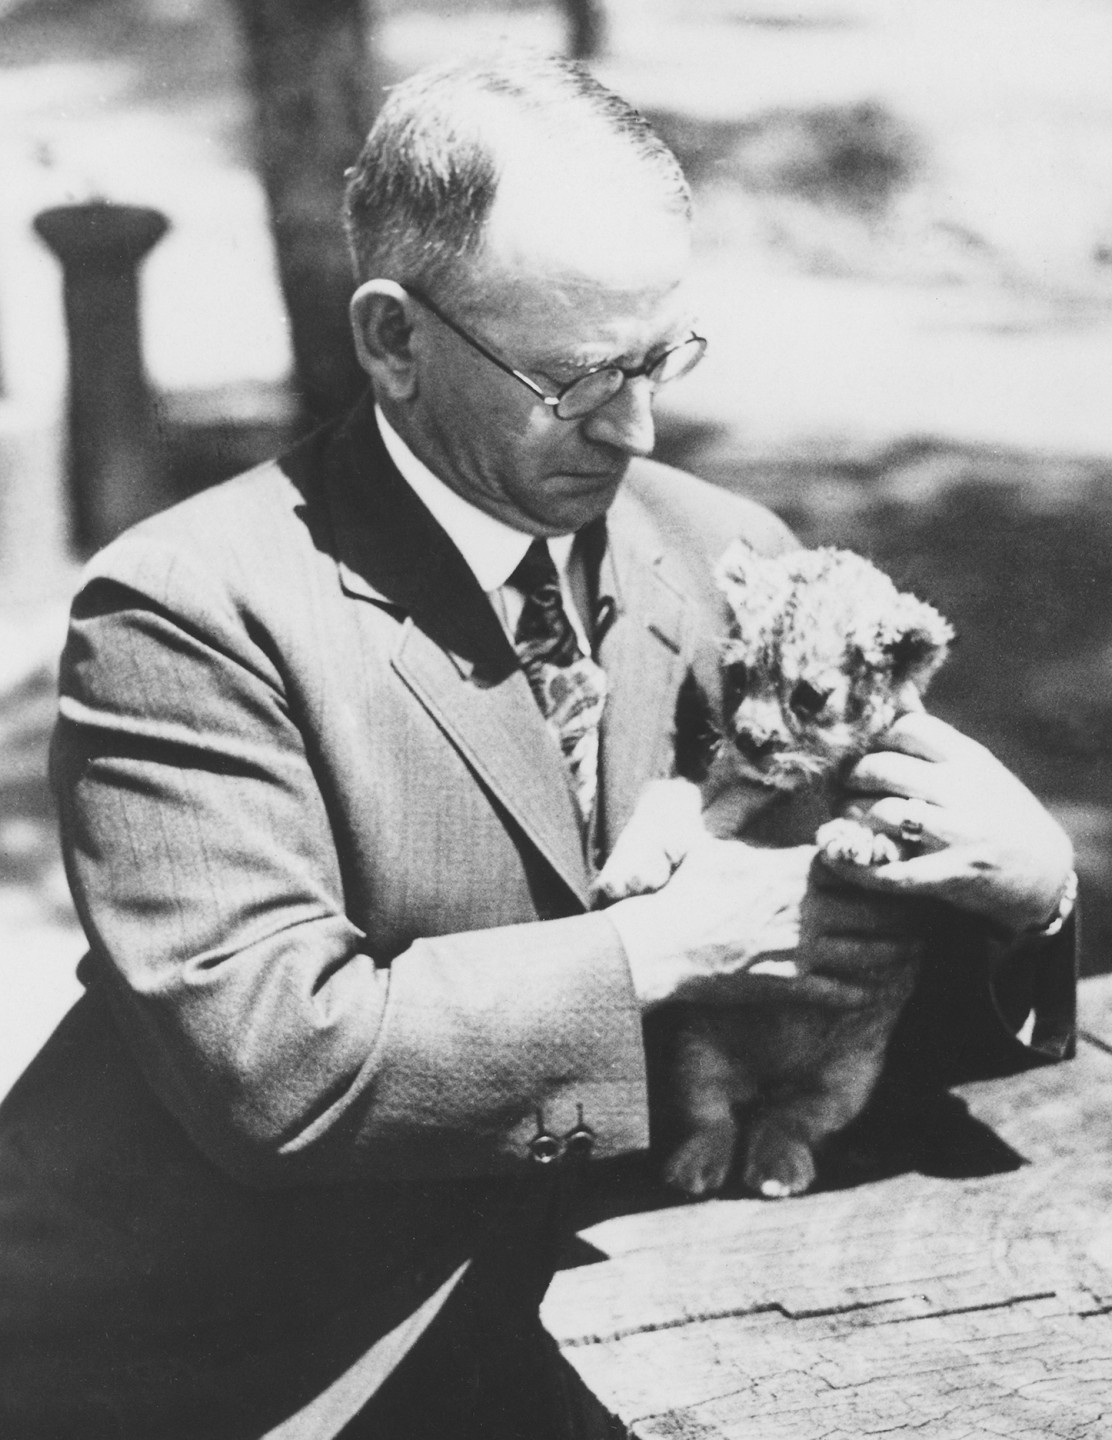 Dr. Harry M. Wegeforth and lion cub